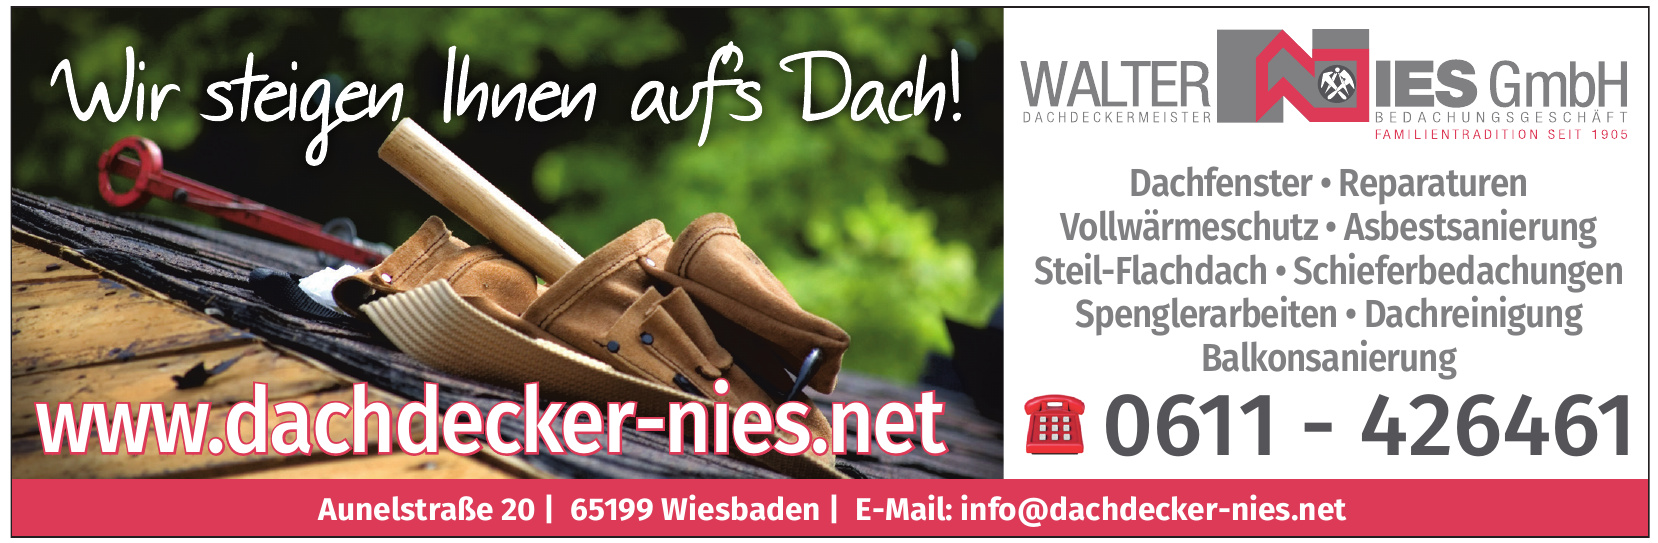 Walter Nies GmbH